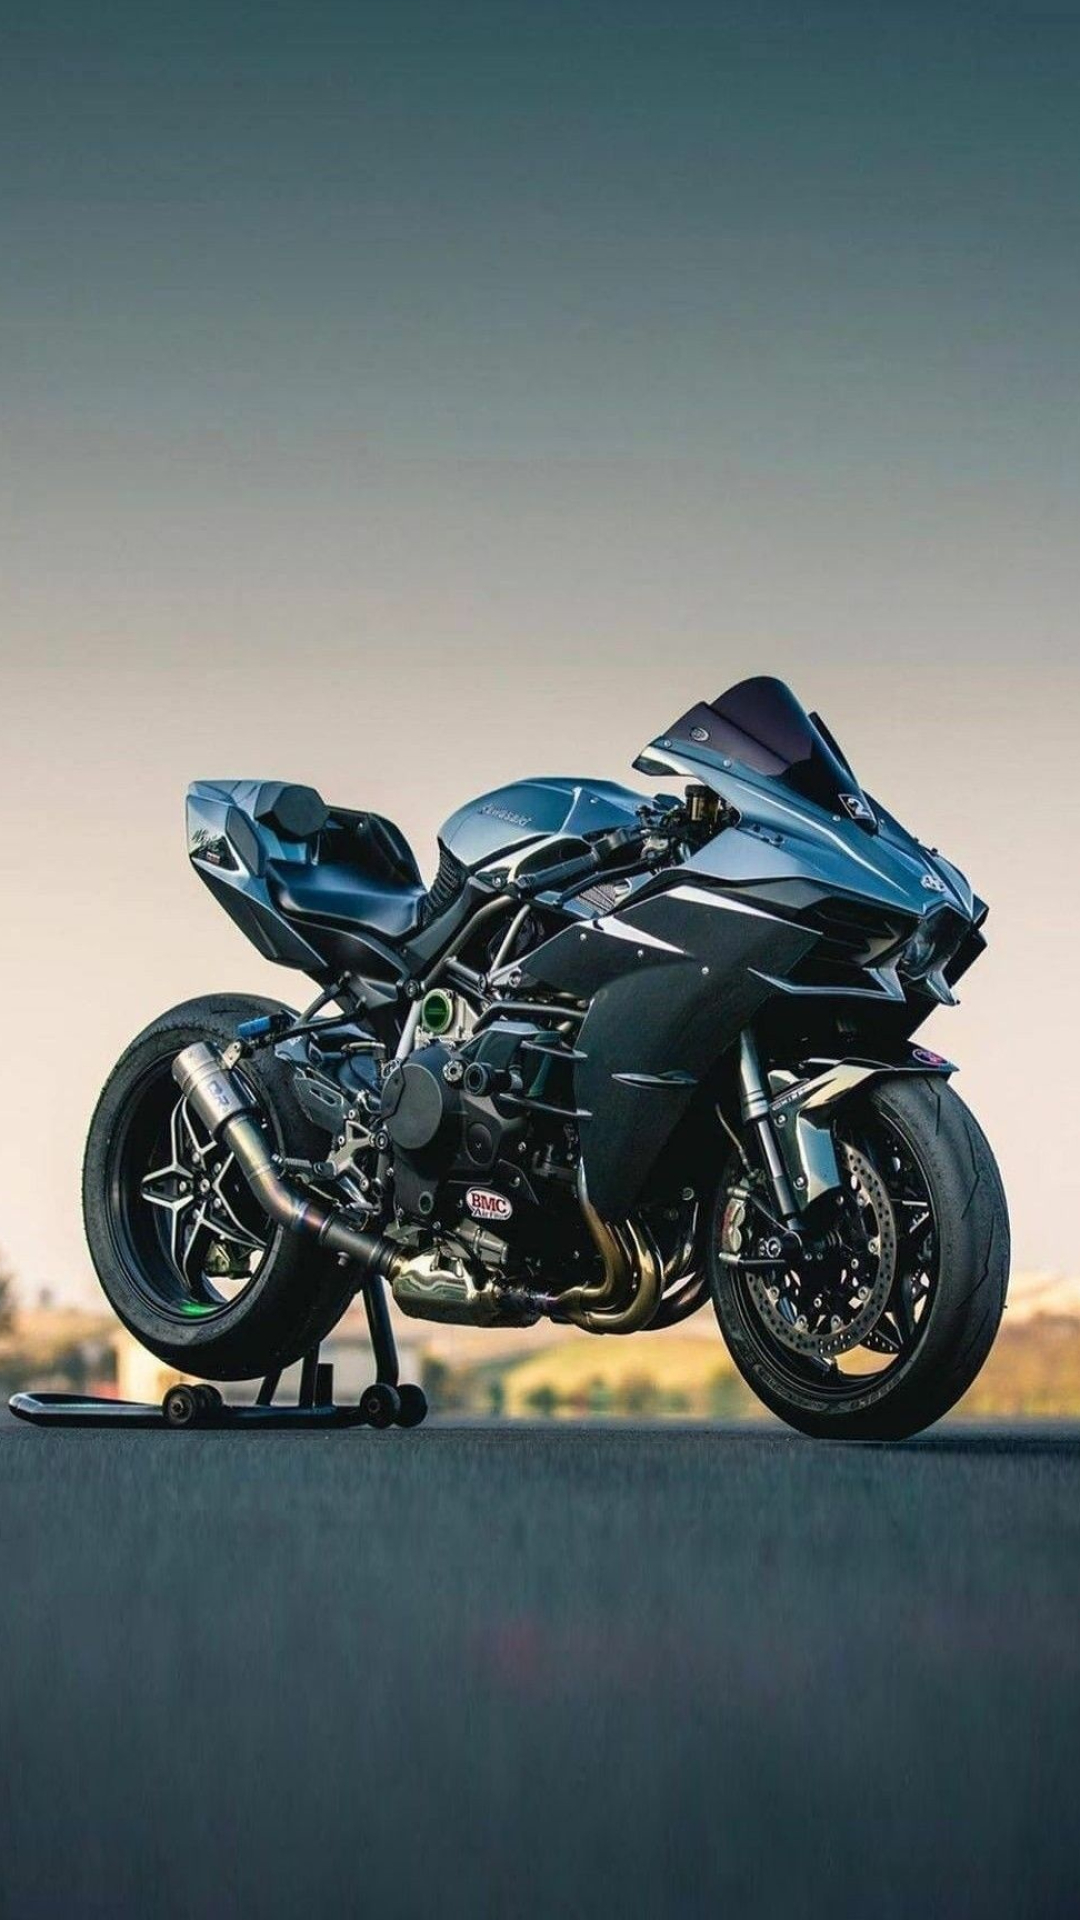 Kawasaki H2, Ninja bike, Powerful engine, Exhilarating ride, 1080x1920 Full HD Handy